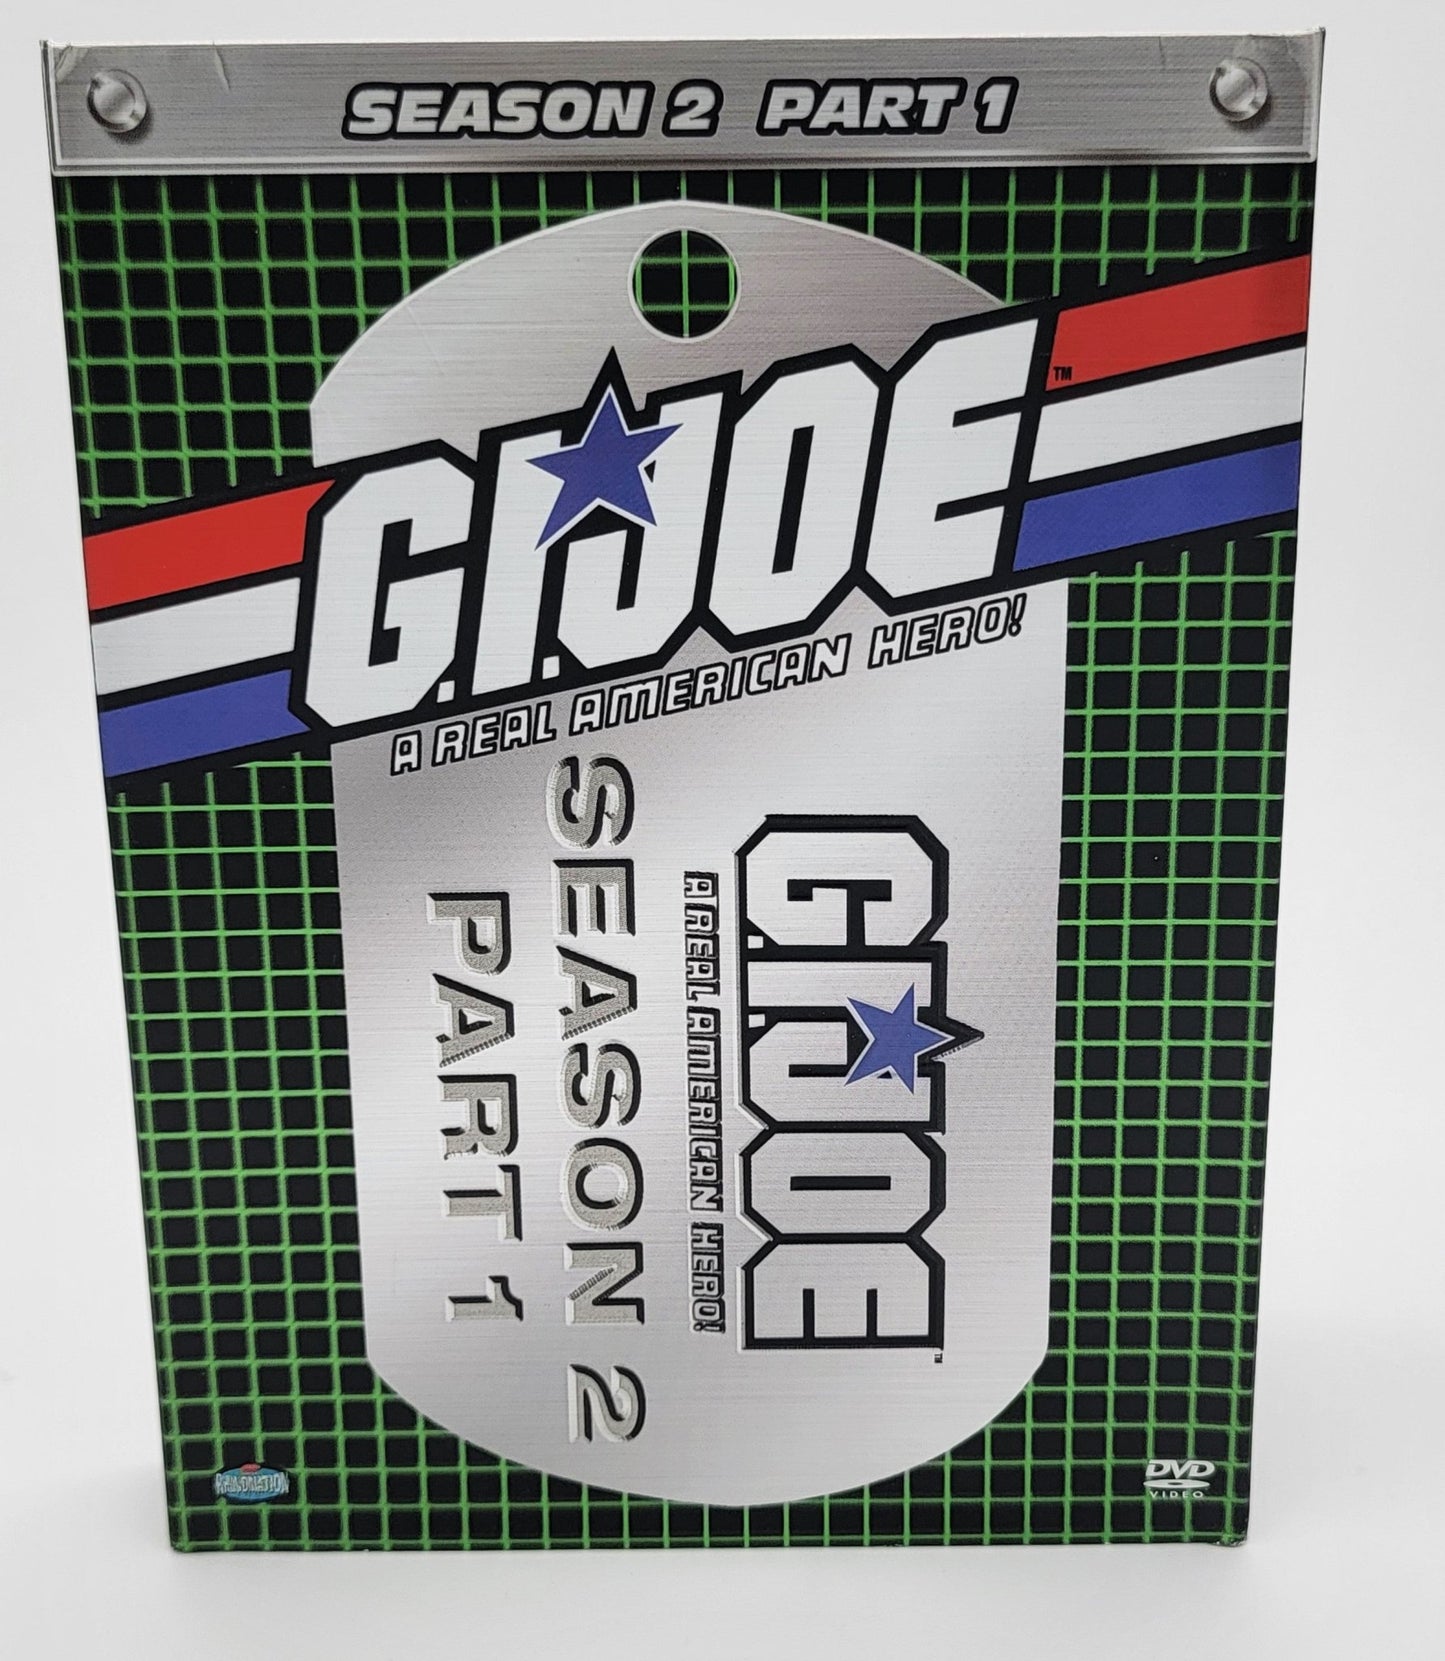 Rhino Theatrical - G.I. Joe A real American Hero | DVD | Season 2 Part 1 - DVD - Steady Bunny Shop